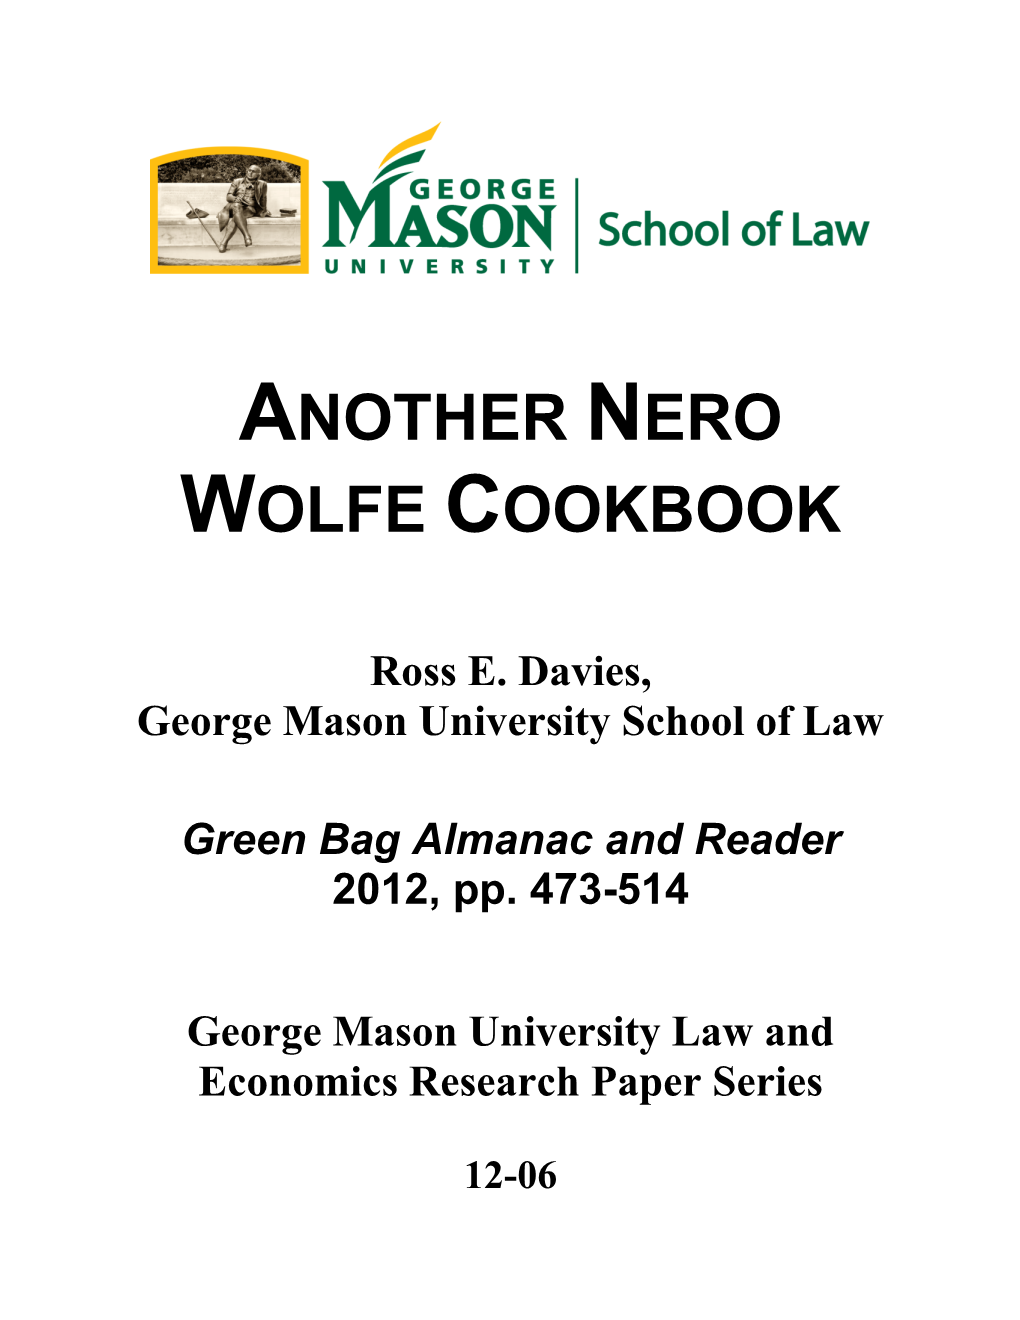 Z Green Bag Almanac and Reader 2012